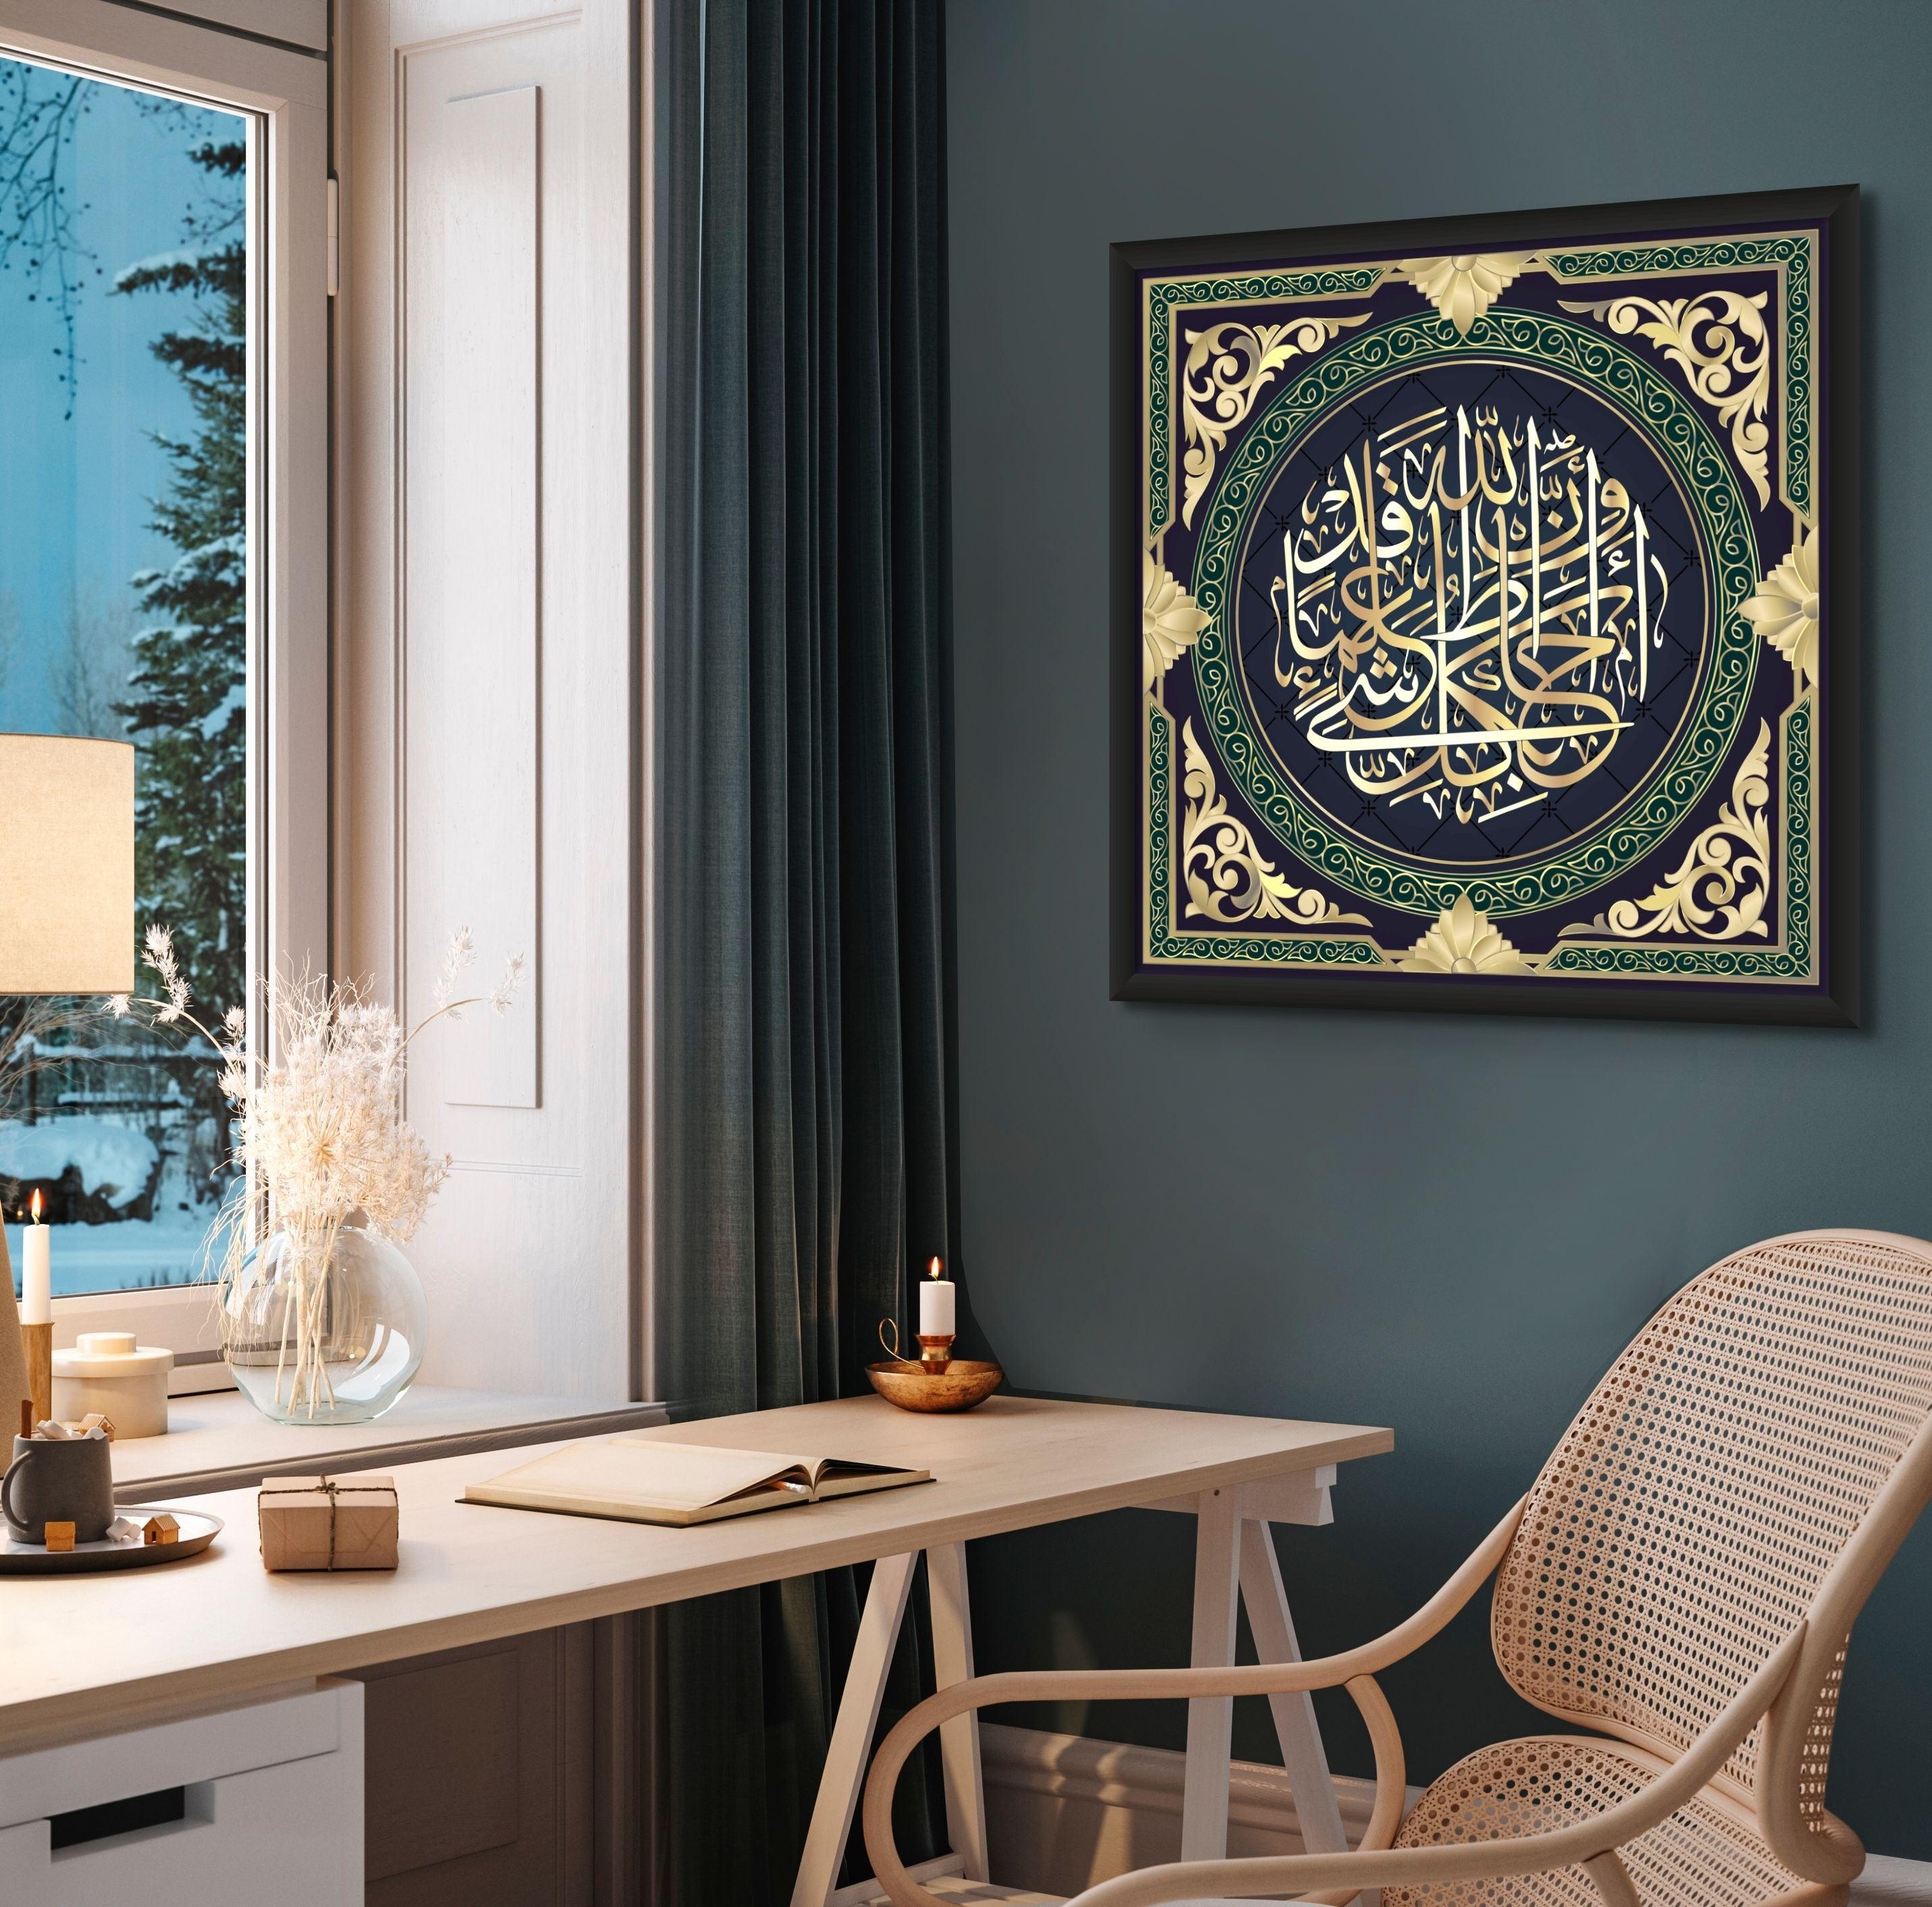 Islamic Calligraphy On Canvas-  Quran 65 ayah 12 - Islamic Art UK